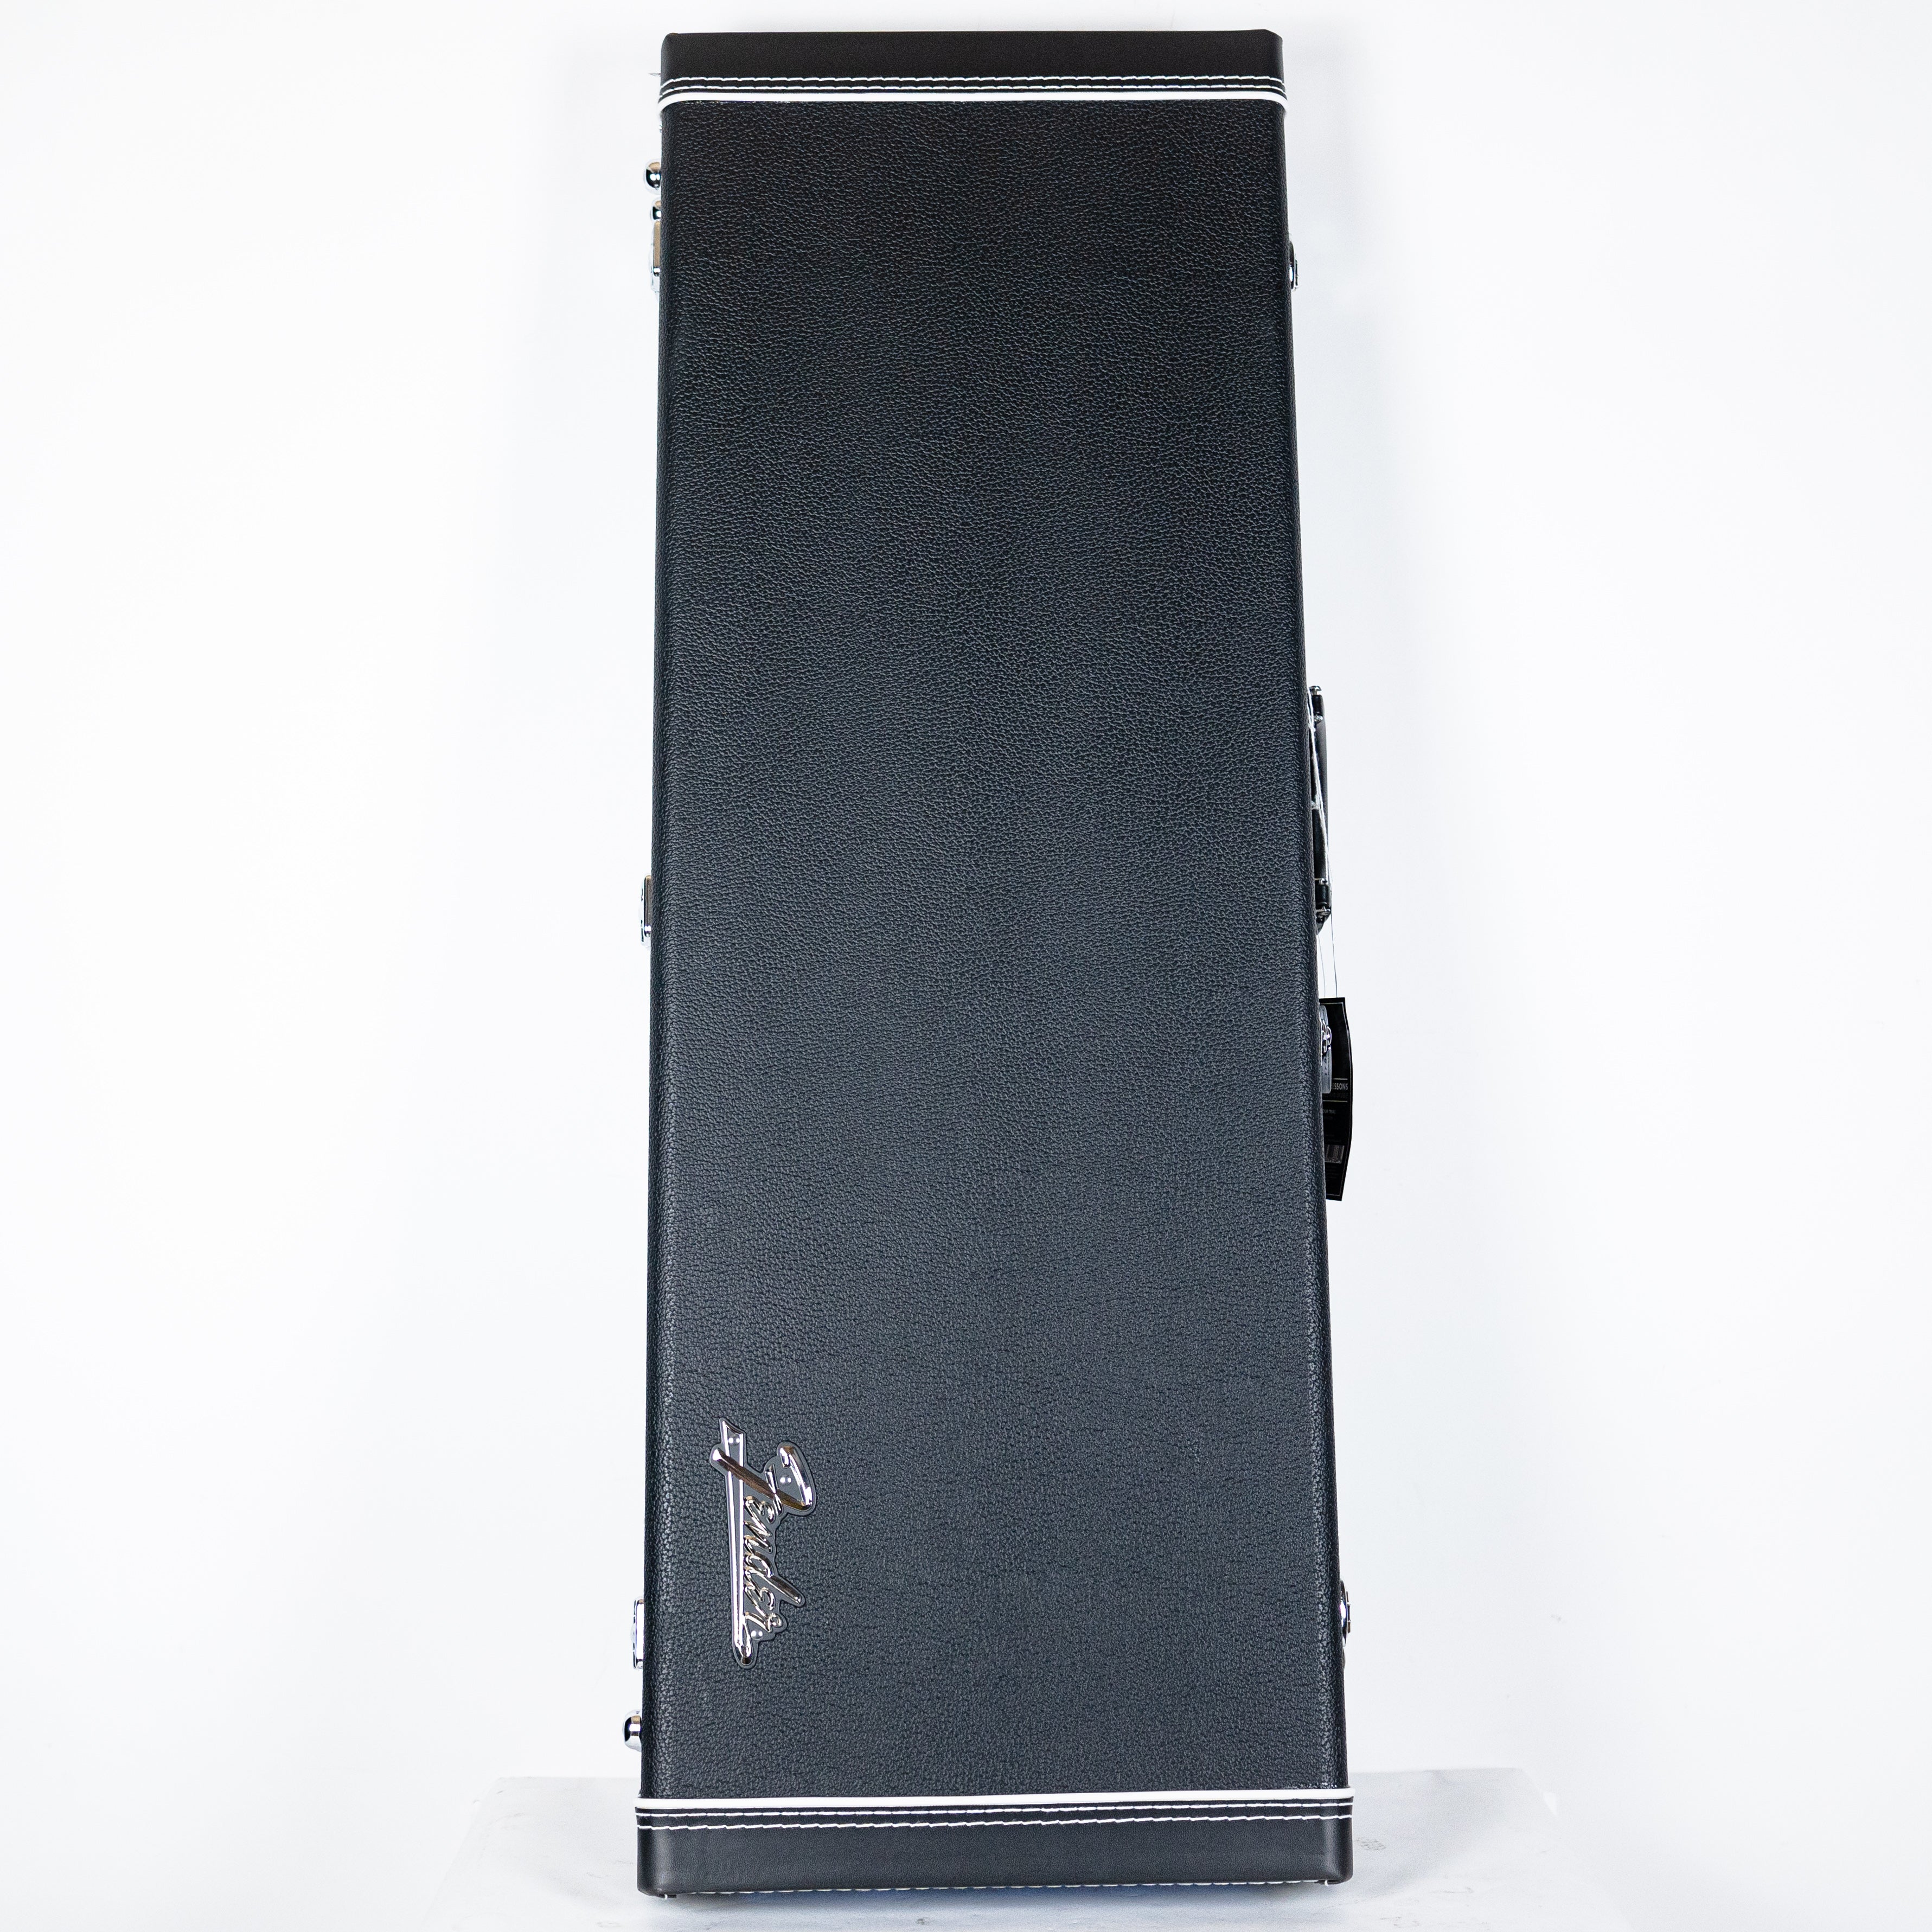 Fender Classic Series Case For Strat/Tele Black